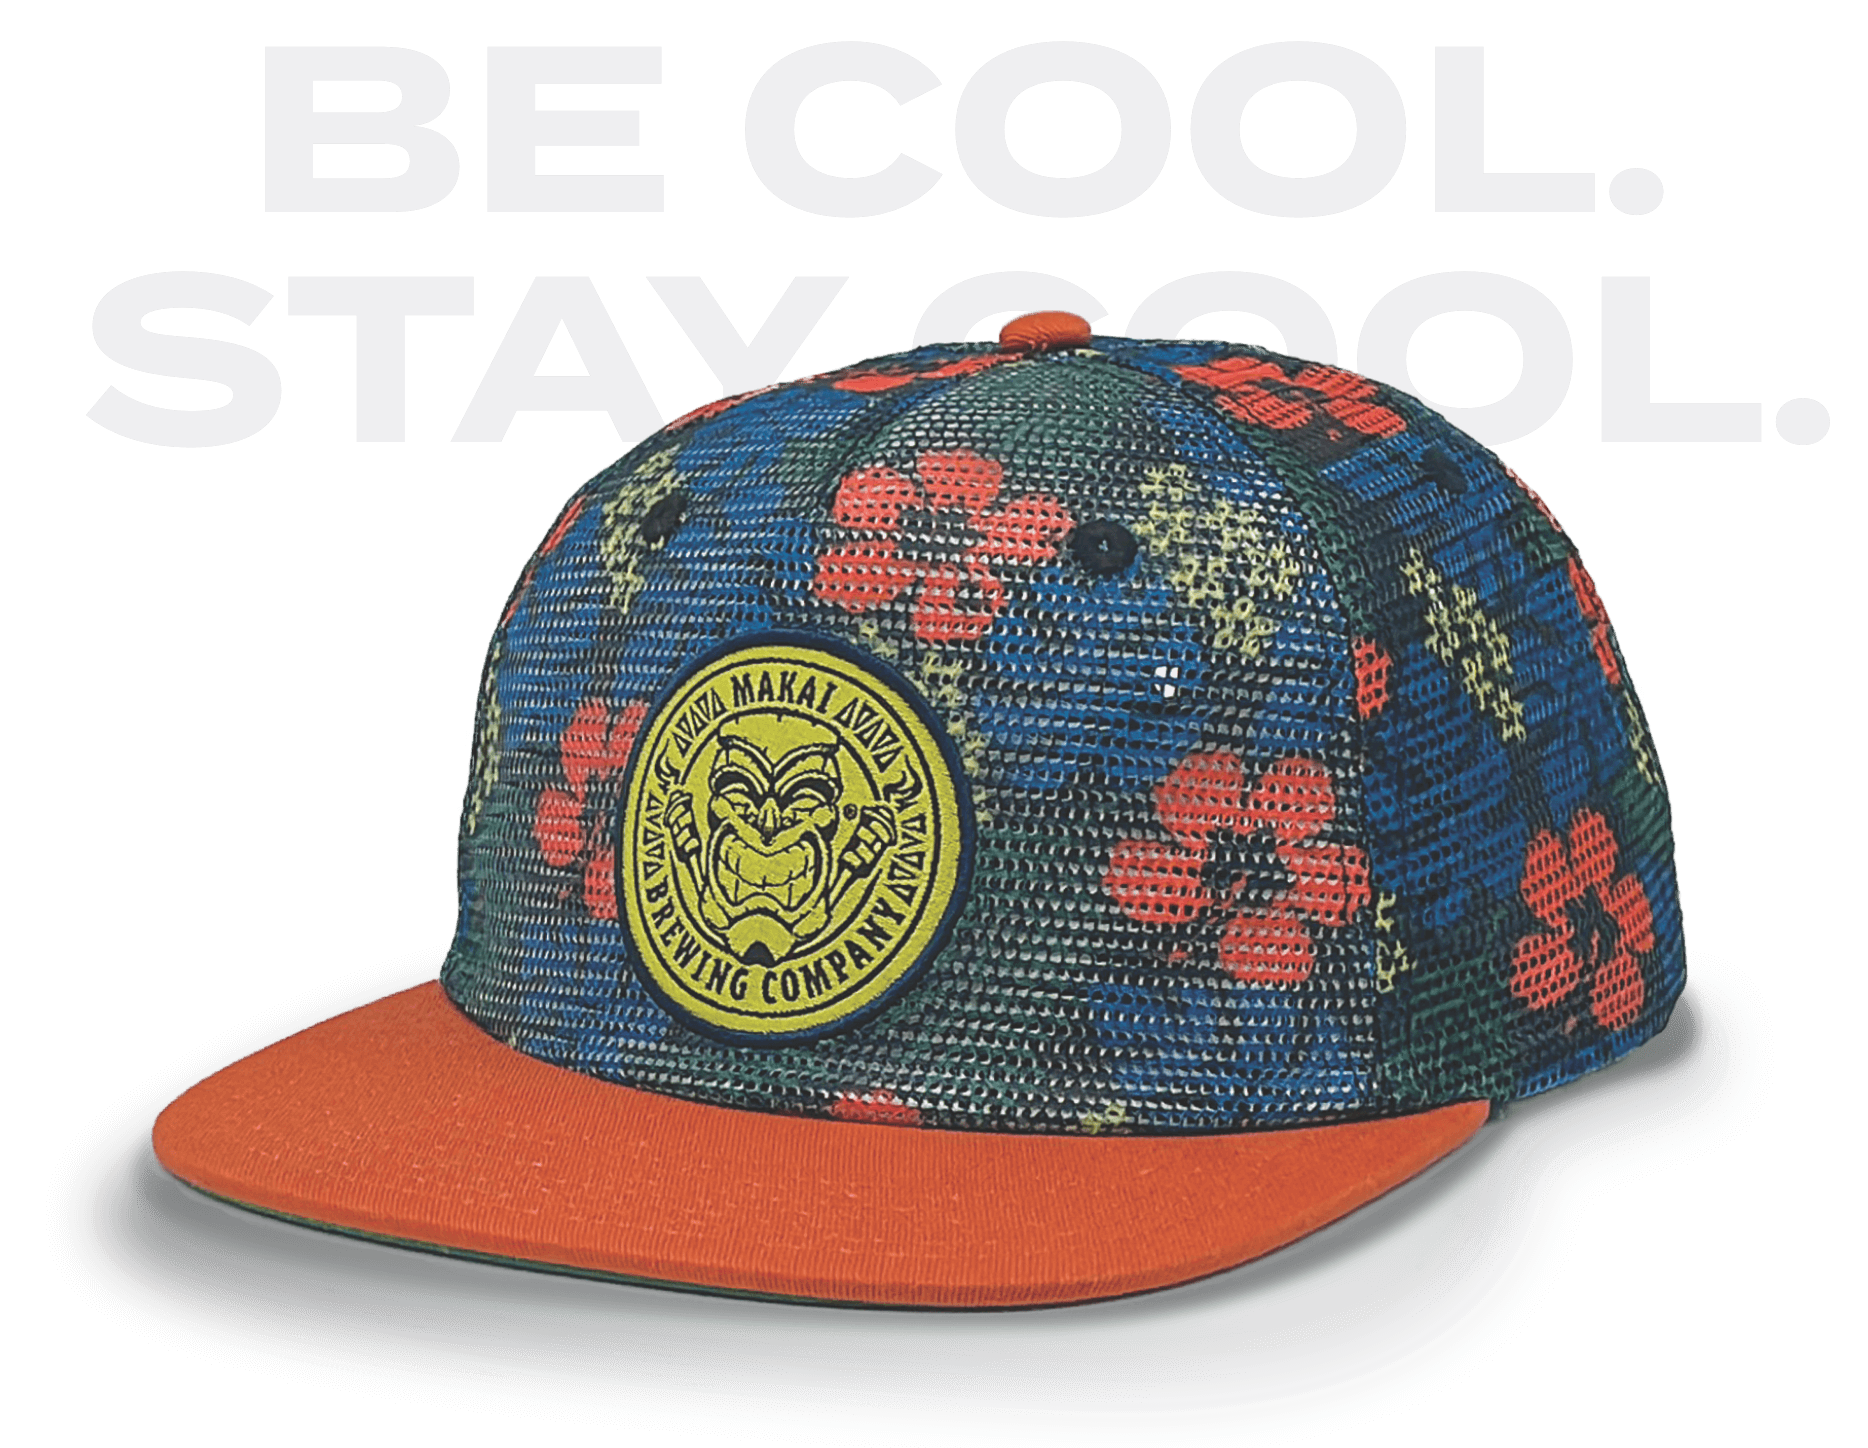 Custom Hat - Be Cool. Stay Cool.